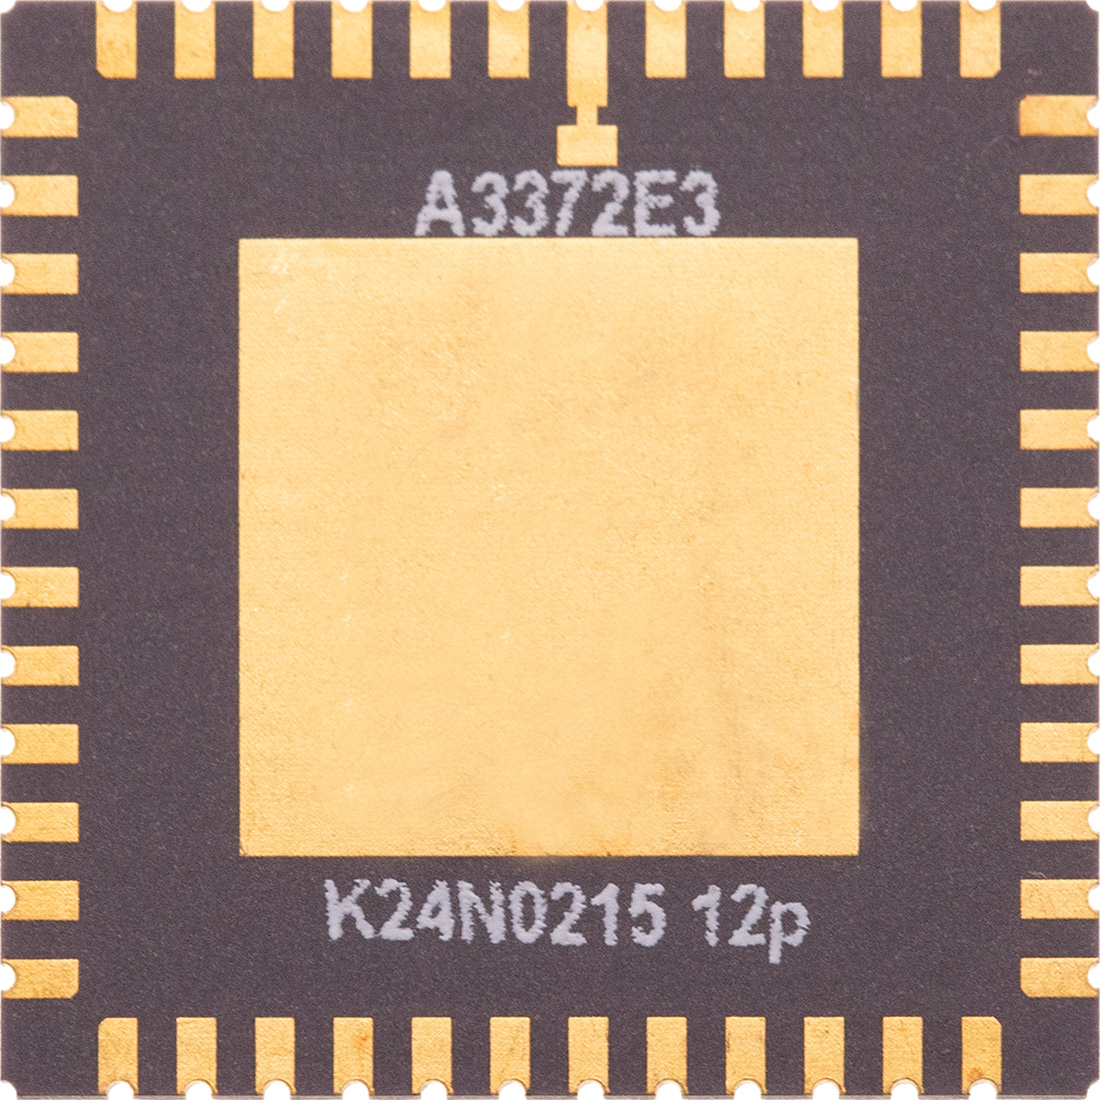 A3372E3-4T，AltaSens CMOS SENSOR,1080p@60fps HD高清宽动态范围CMOS,WDR CMOS sensor图像传感器